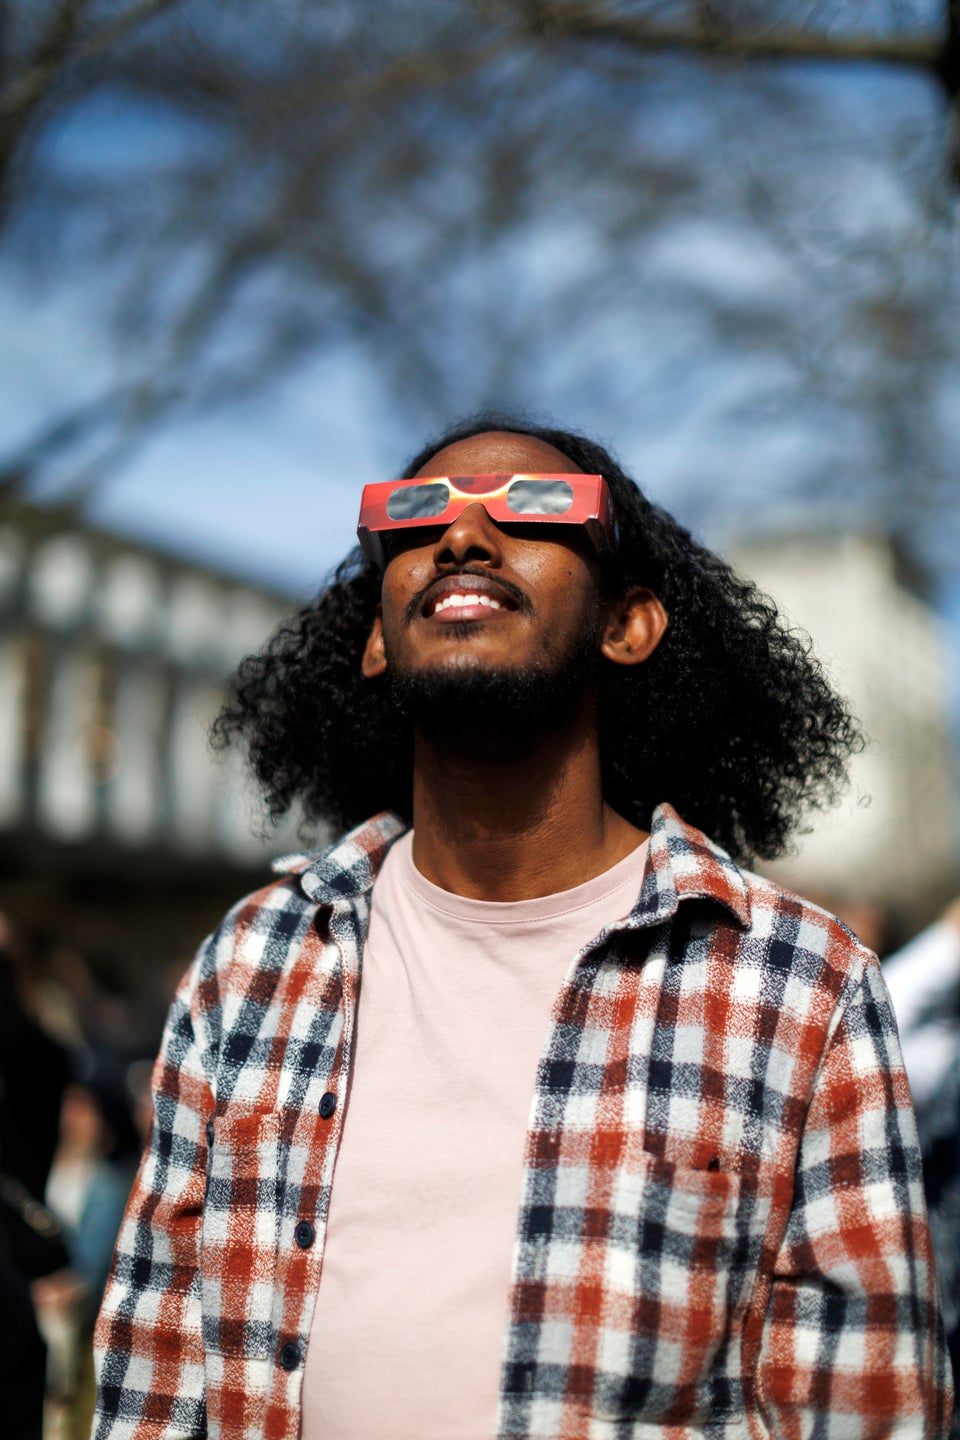 A man wearing solar glasses looks skyward.